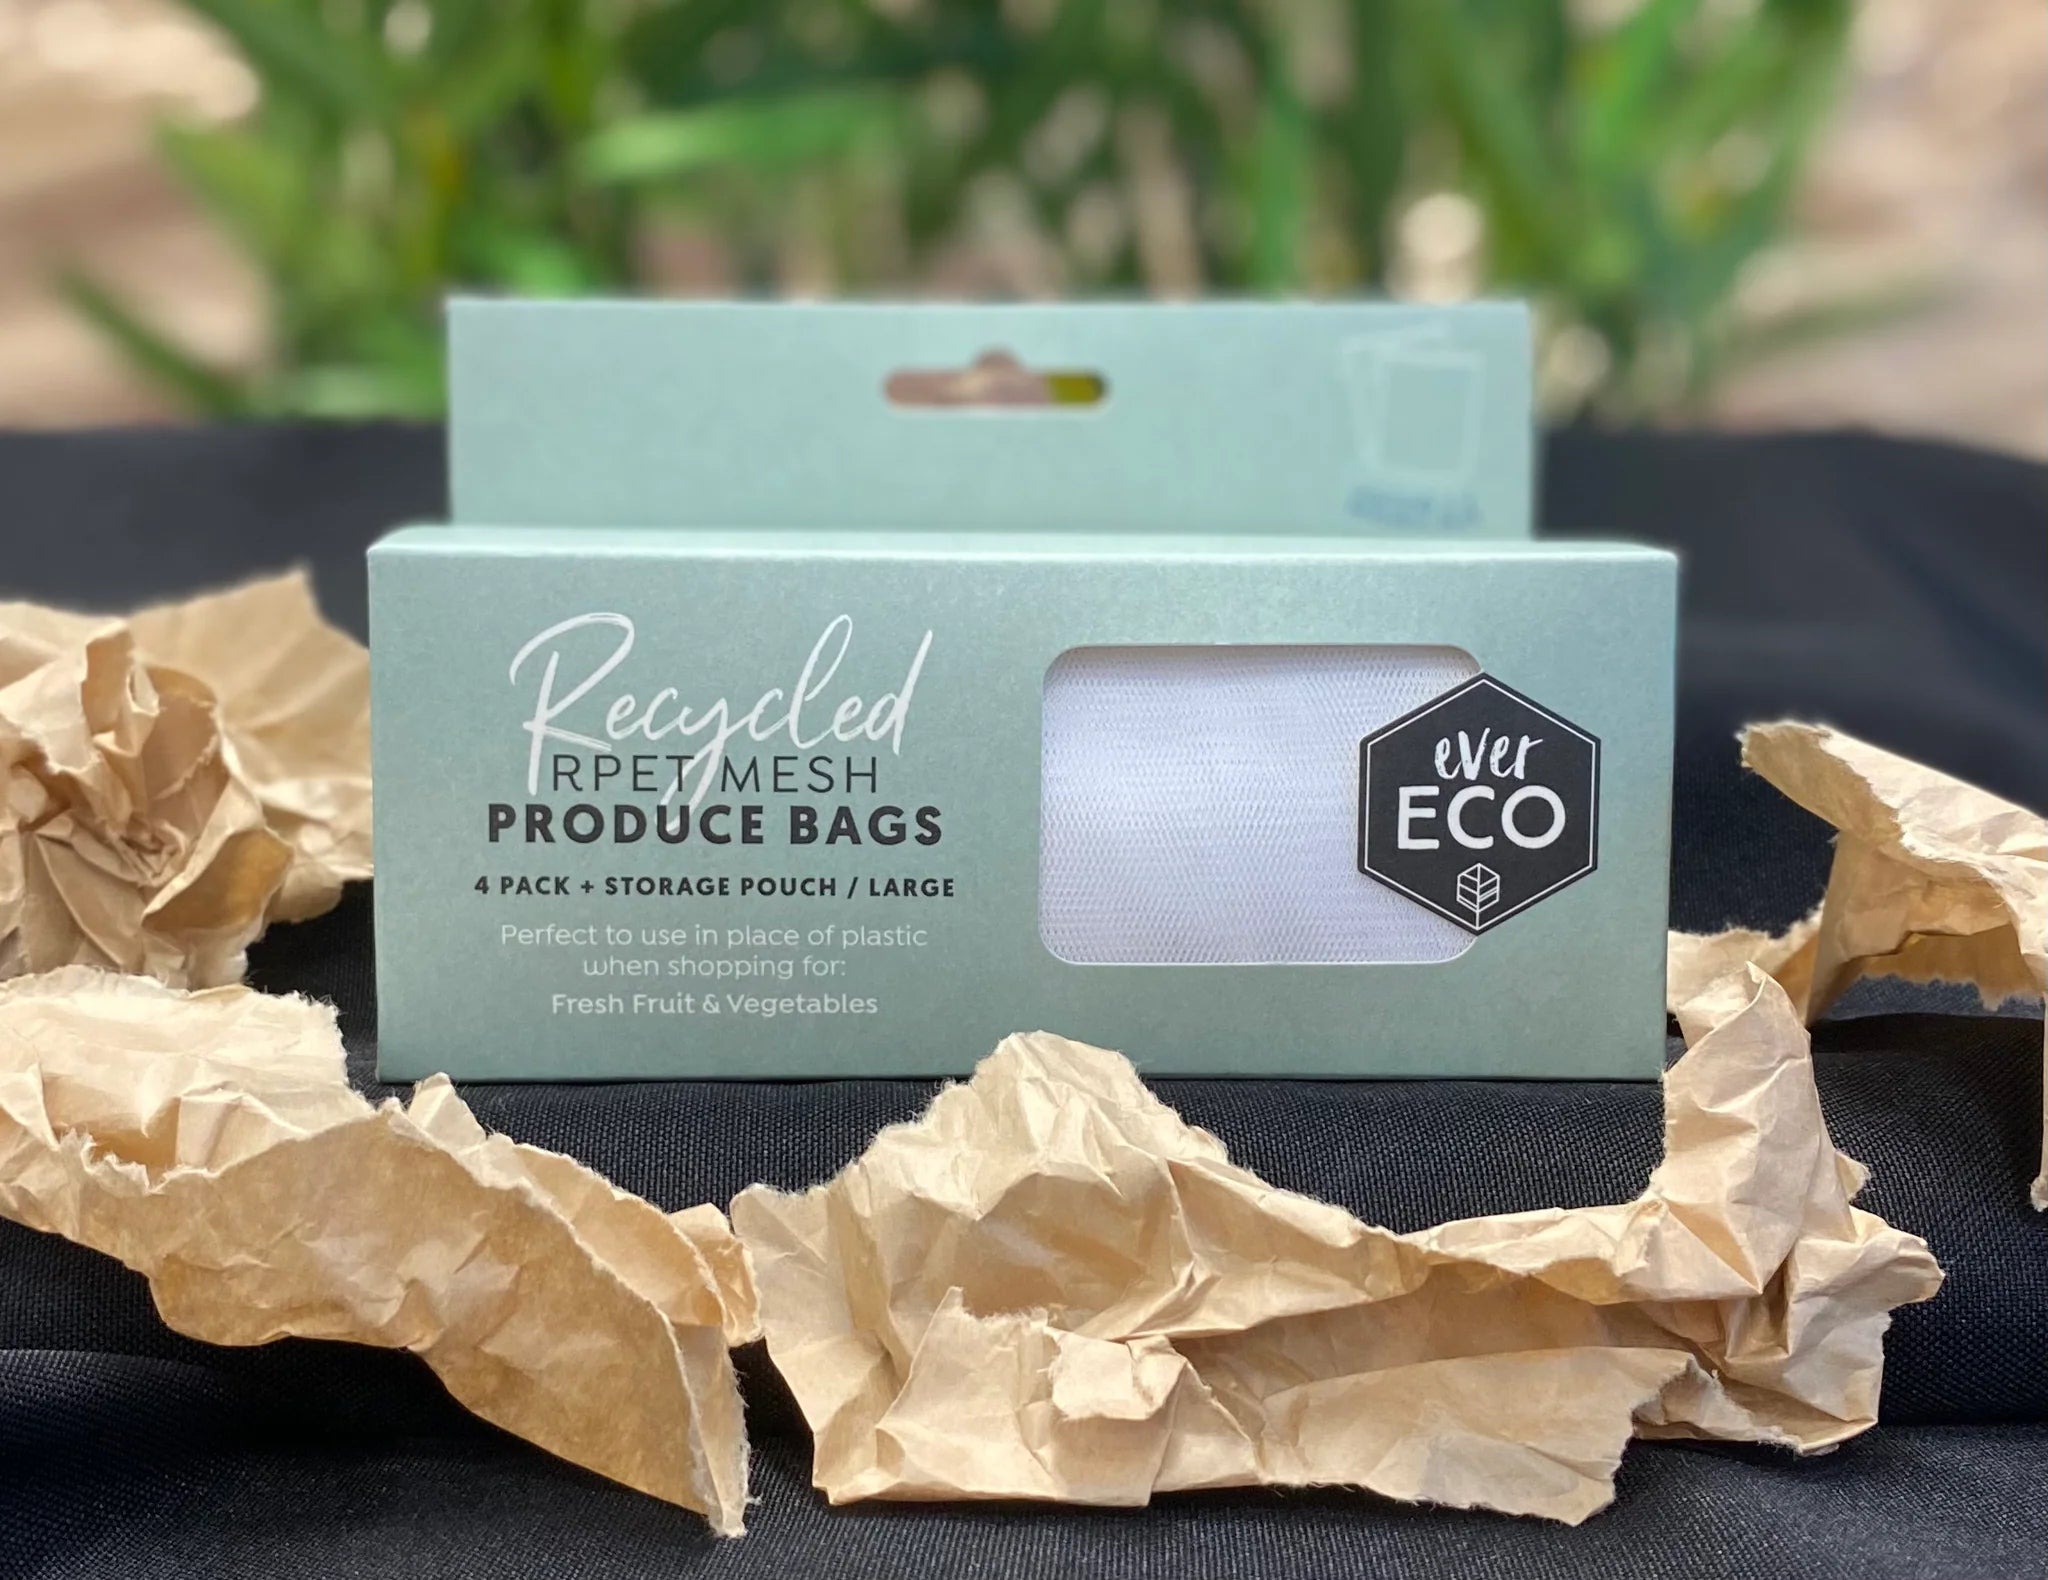 A box of reusable mesh produce bags